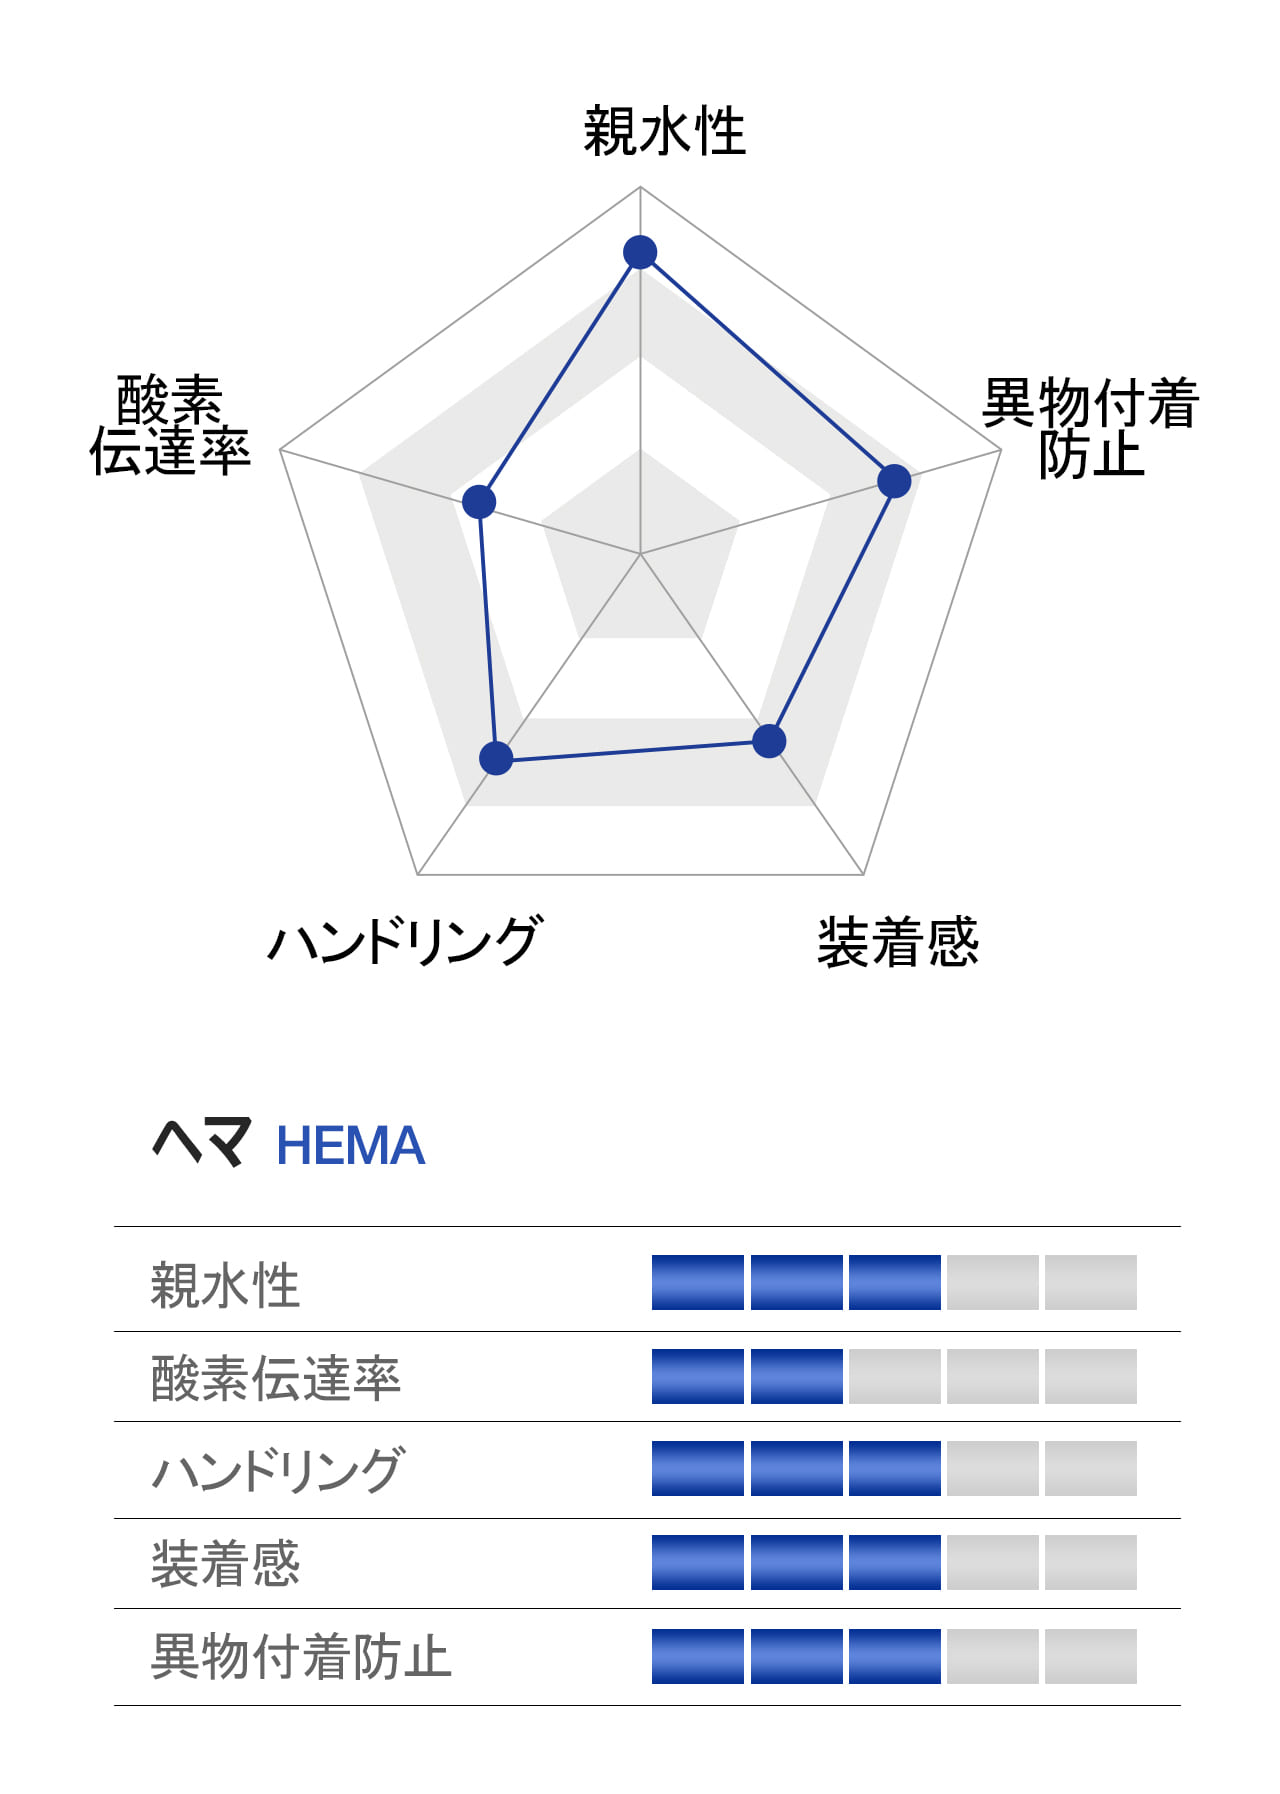 characteristics graph of HEMA